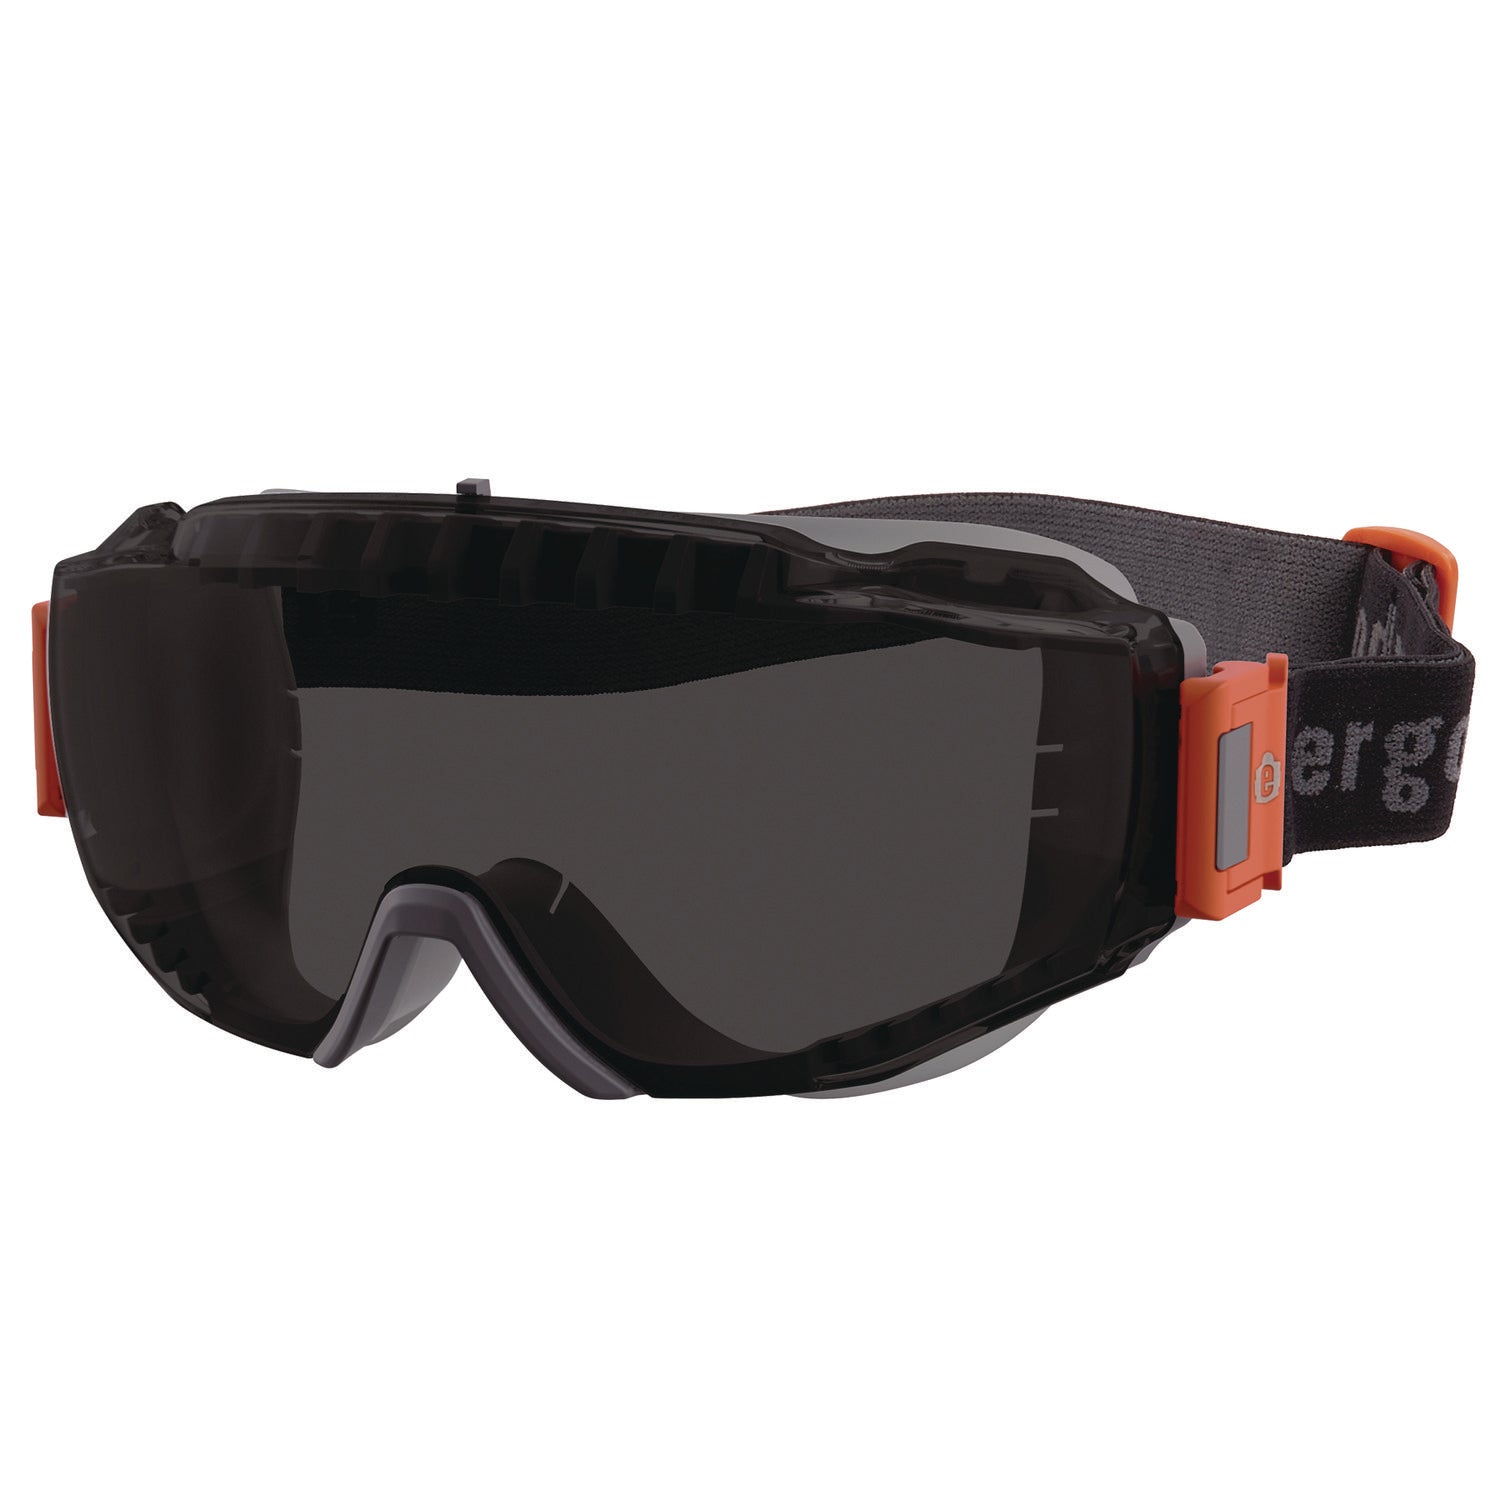 skullerz-modi-otg-anti-scratch-enhanced-anti-fog-safety-goggles-with-elastic-strap-smoke-lens-ships-in-1-3-business-days_ego60301 - 1